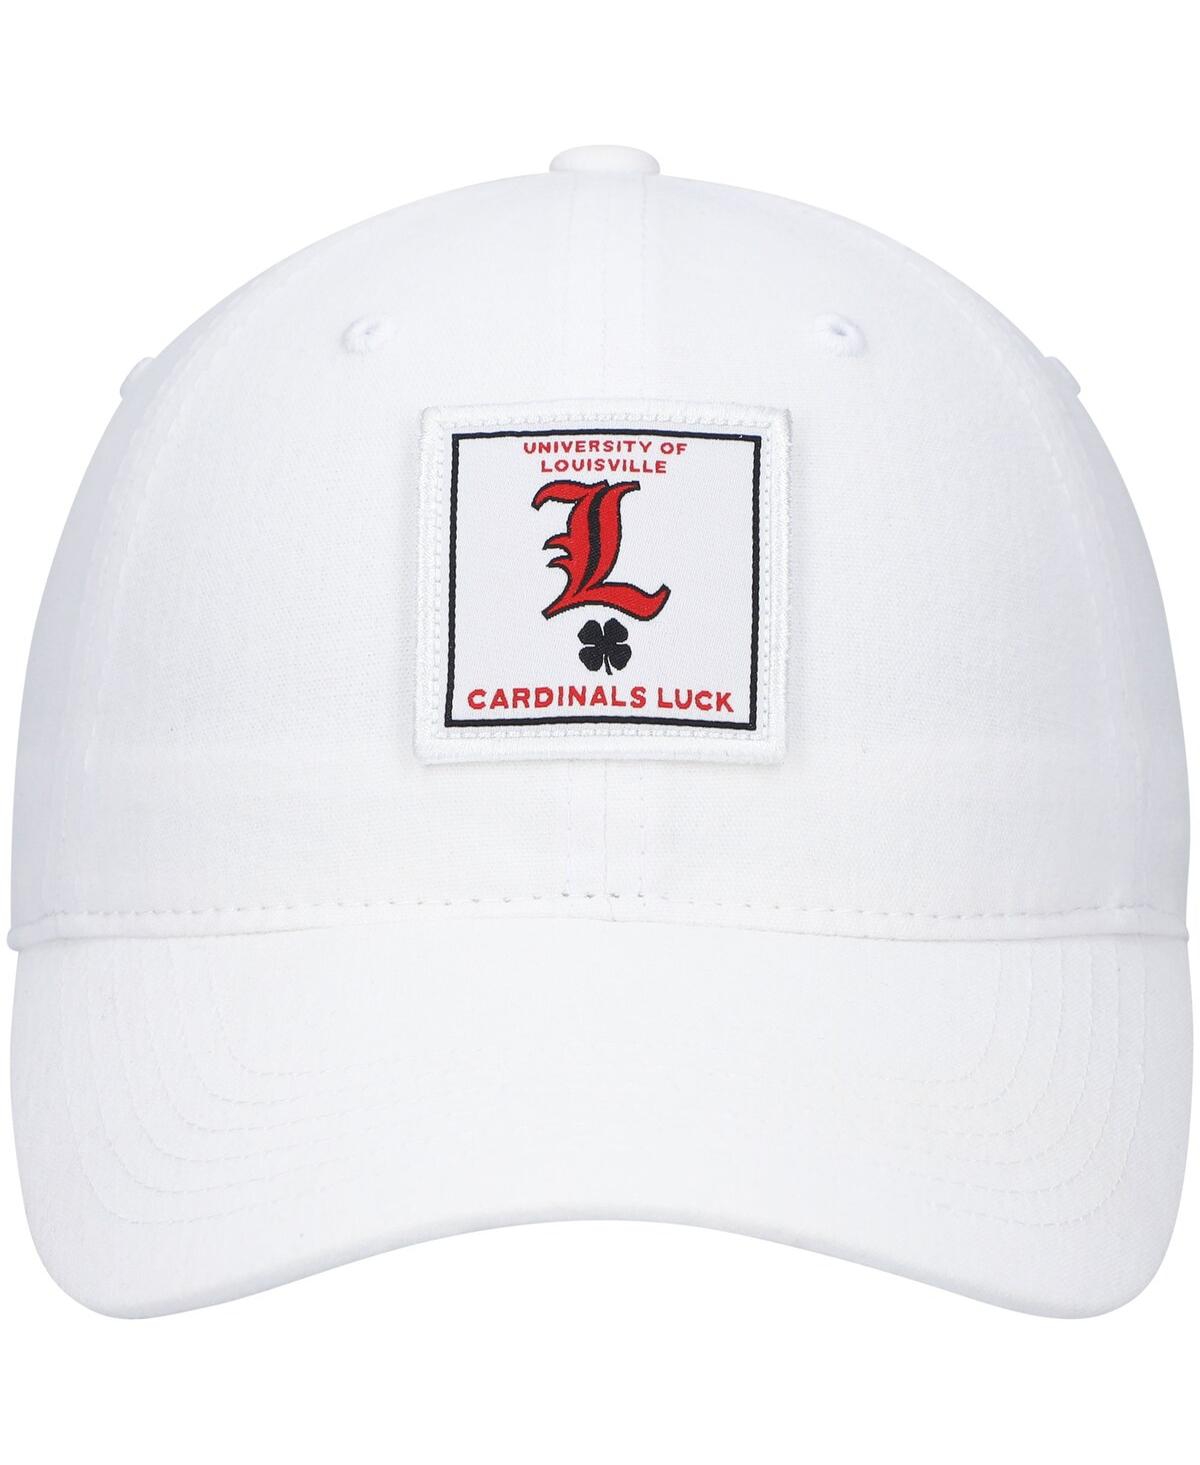 university of louisville mens hat